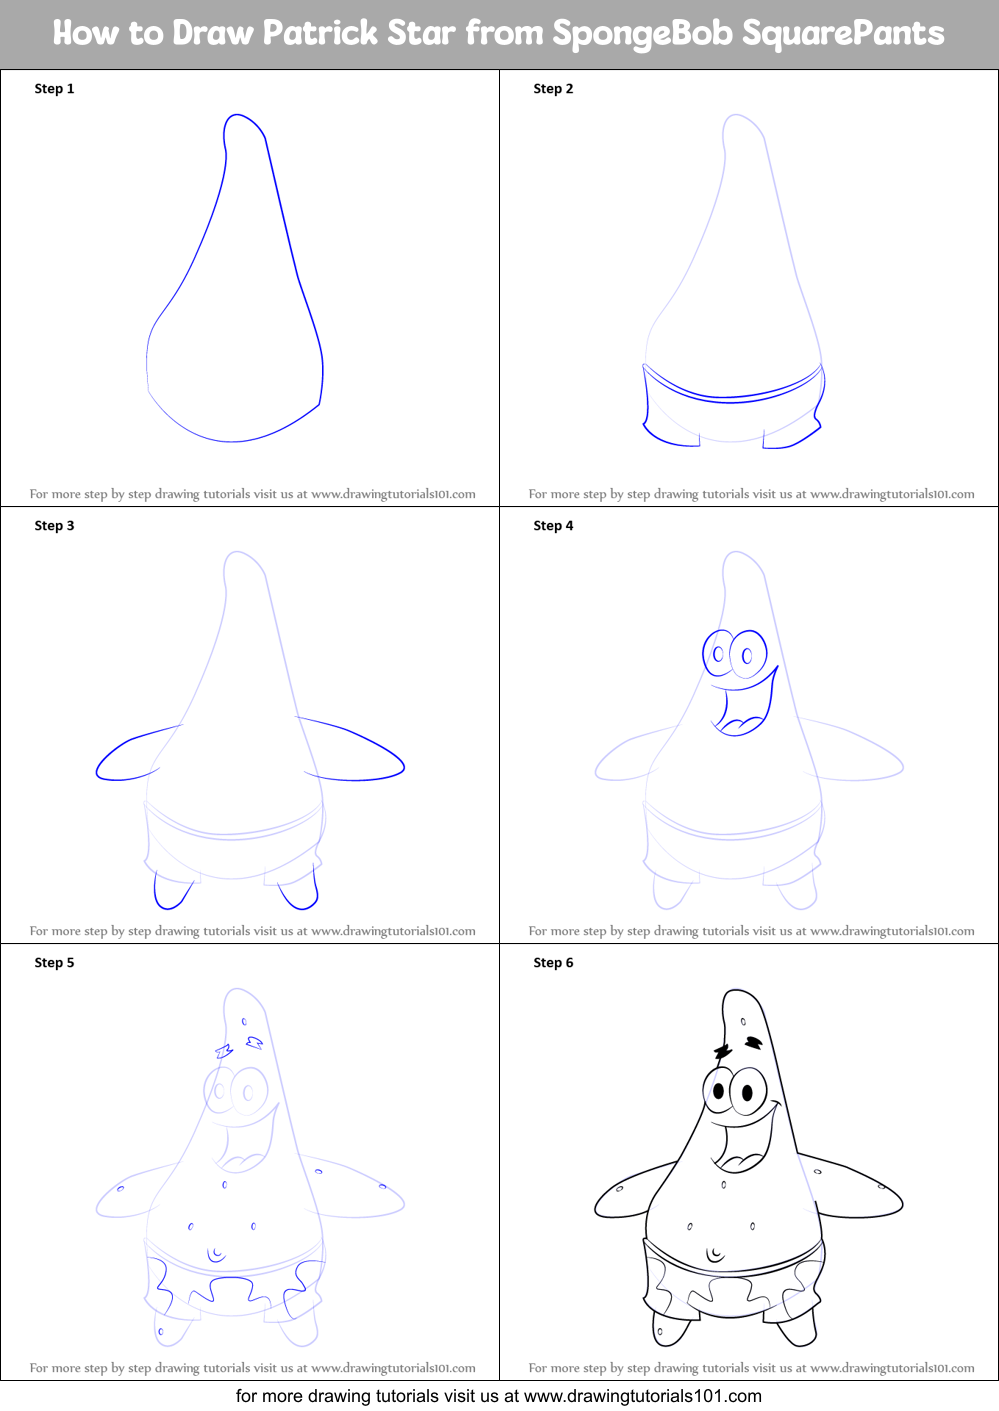 How to Draw Patrick Star from SpongeBob SquarePants (SpongeBob